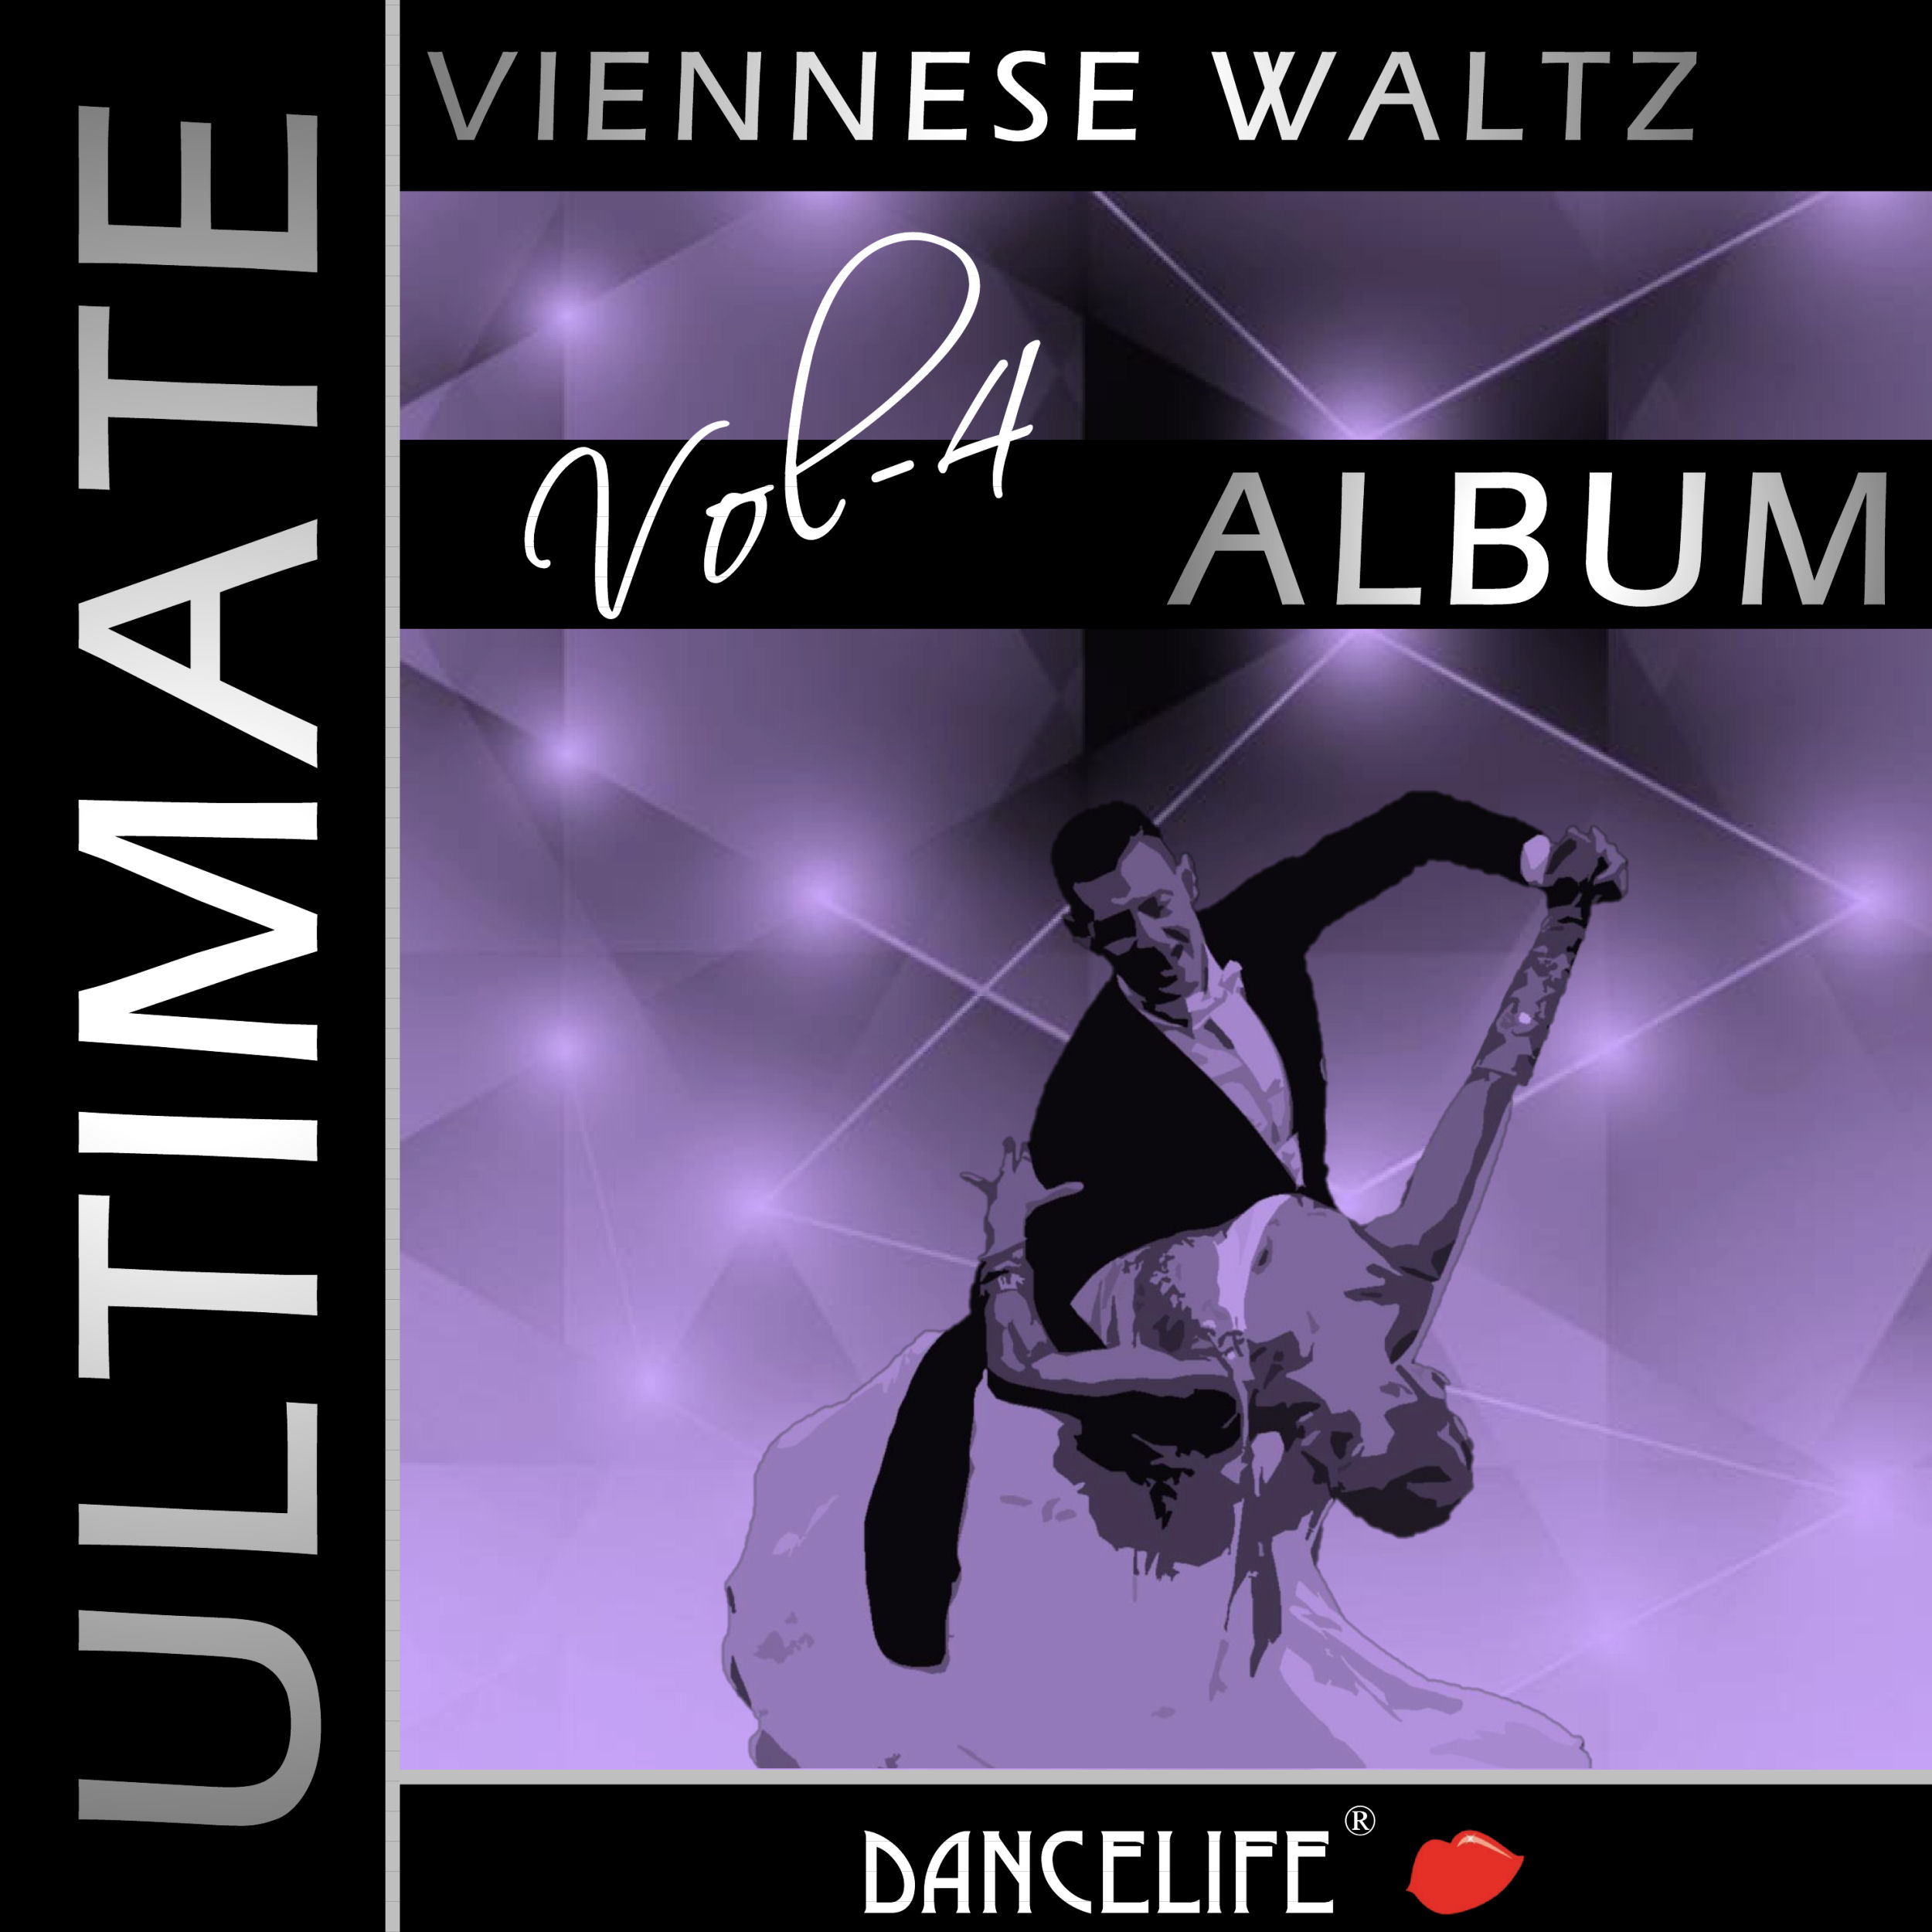 Dancelife presents: The Ultimate Viennesse Waltz Album, Vol. 4